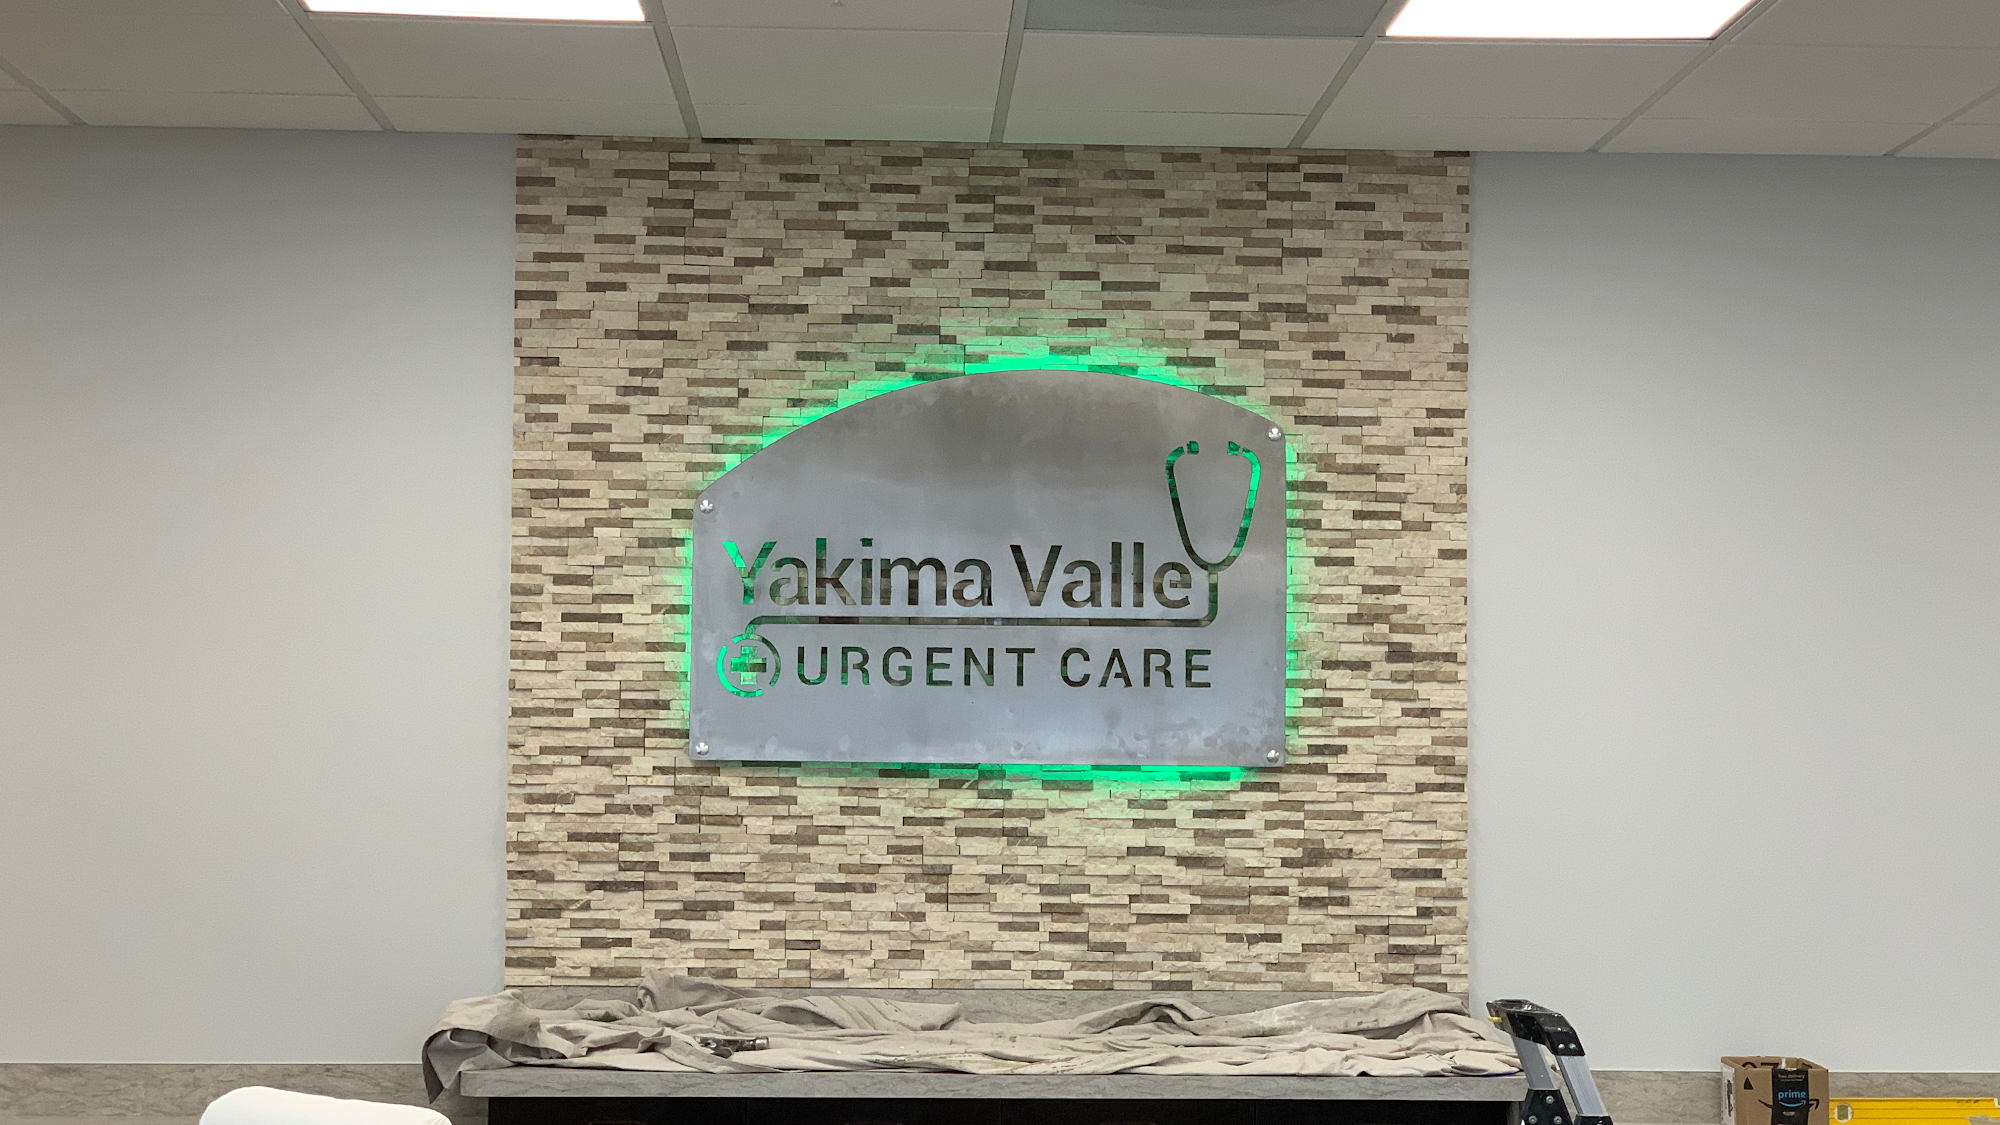 Yakima Valley Urgent Care